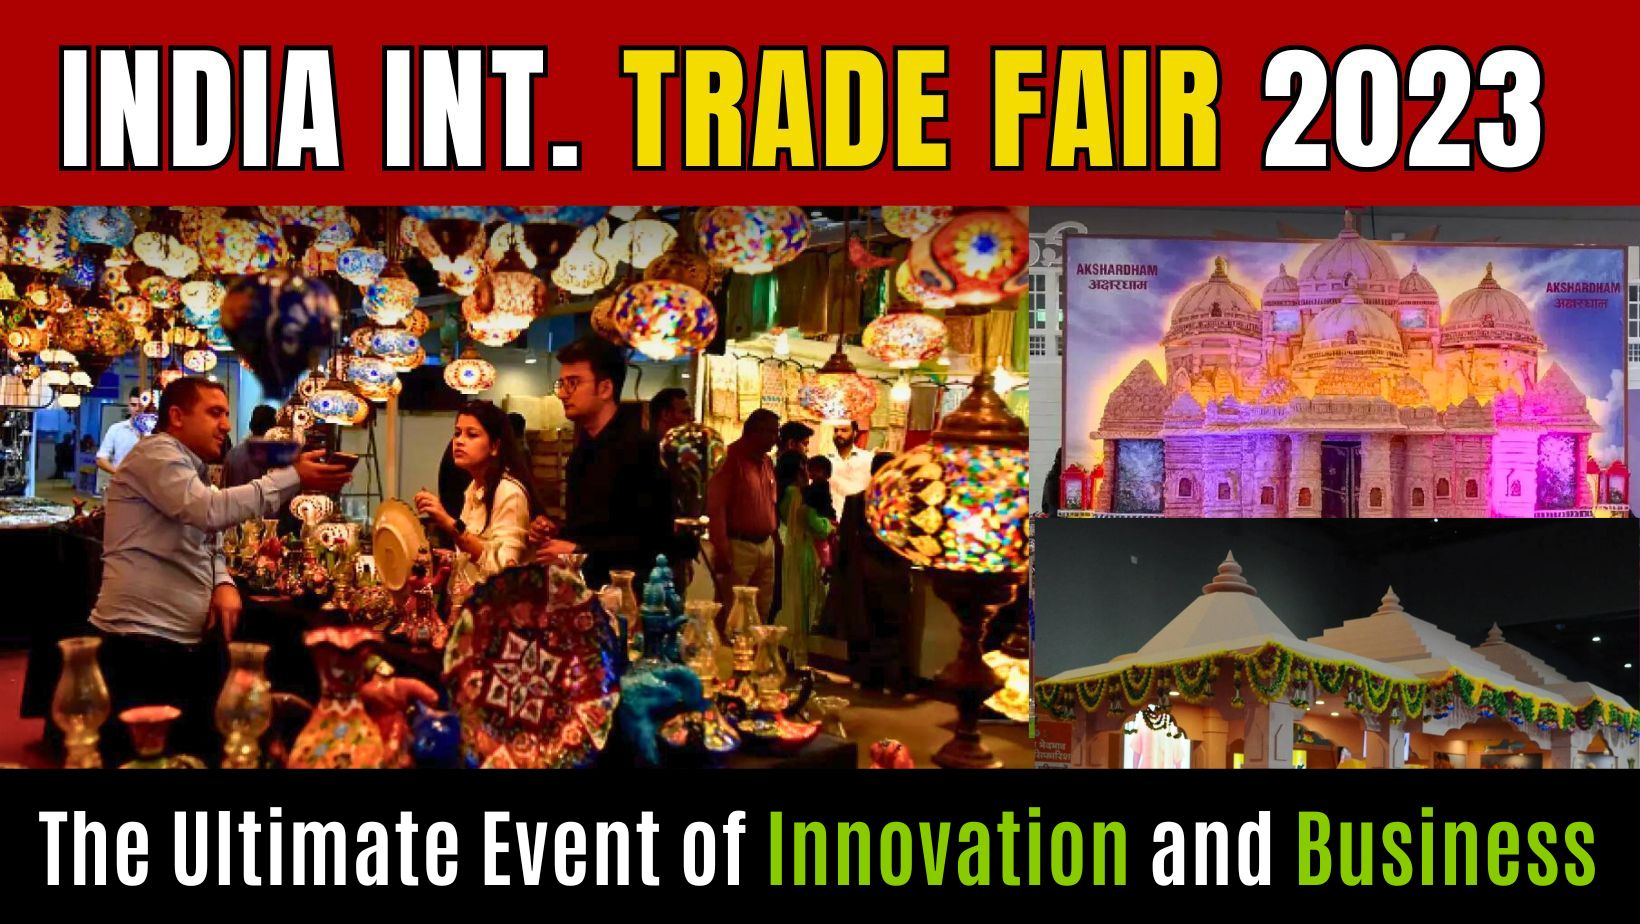 International Trade Fair 2023 at Pragati Maidan